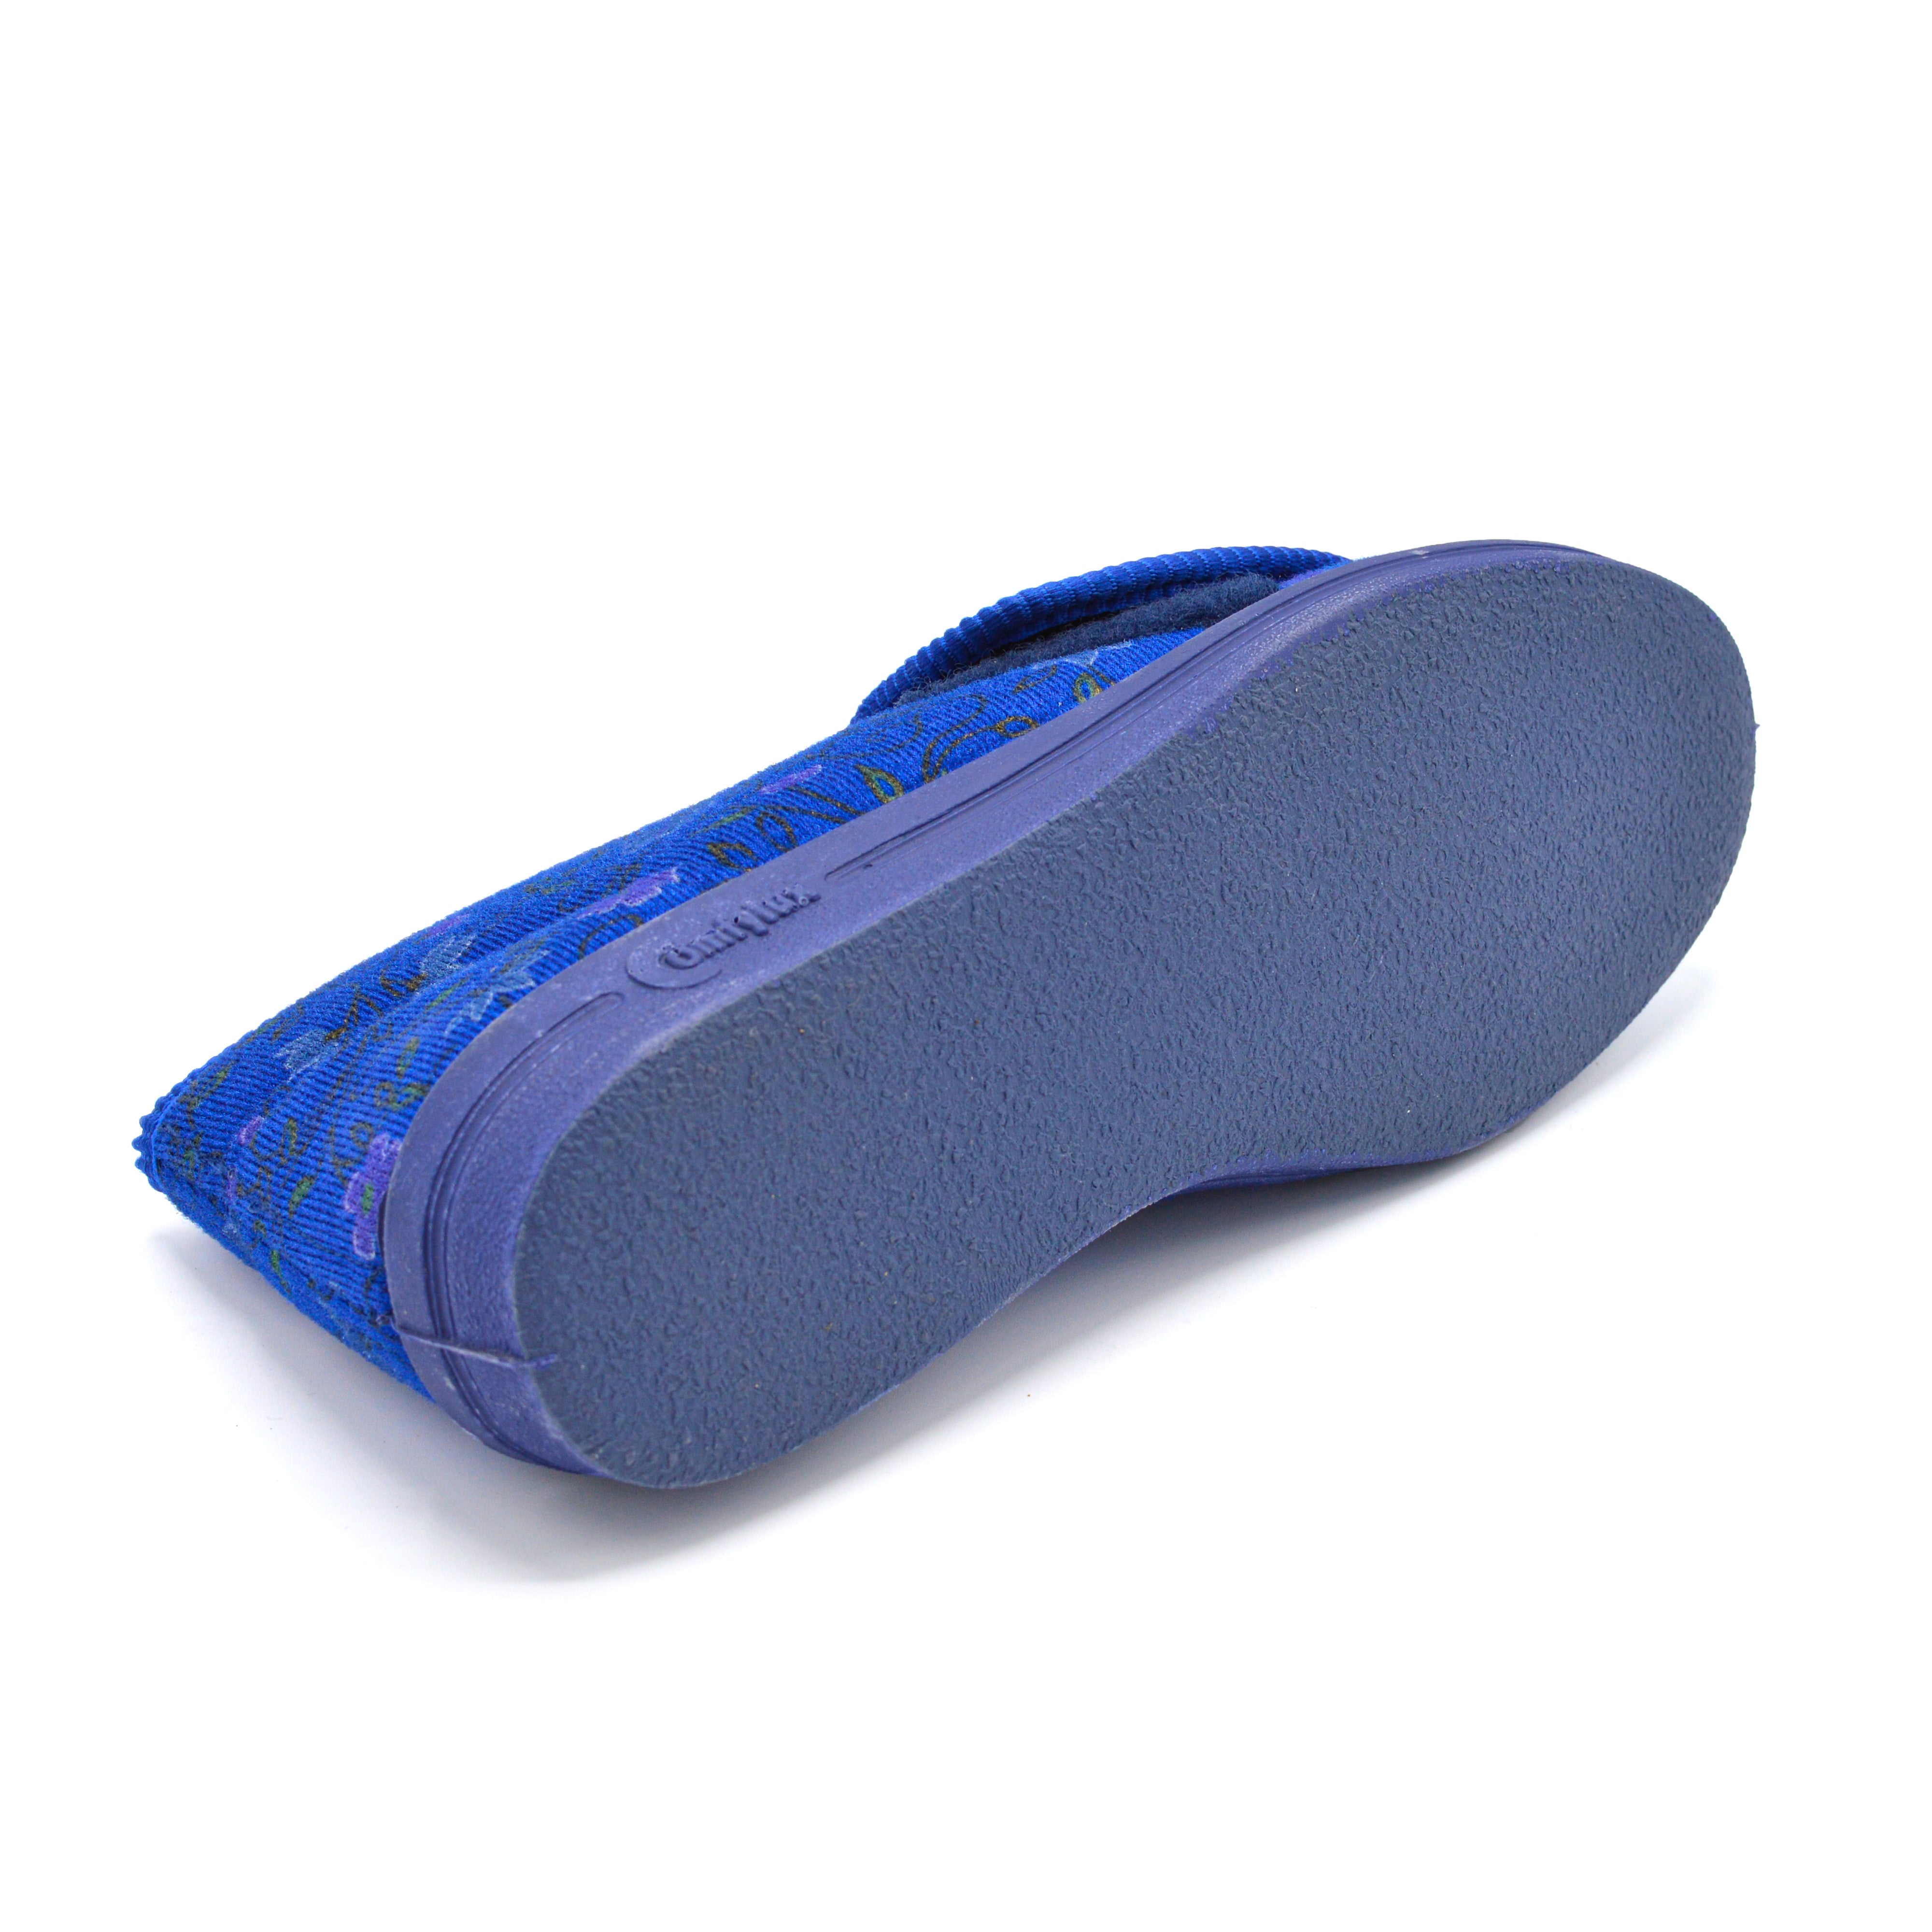 Velcro Boot Slipper Velcro For Swollen Foot